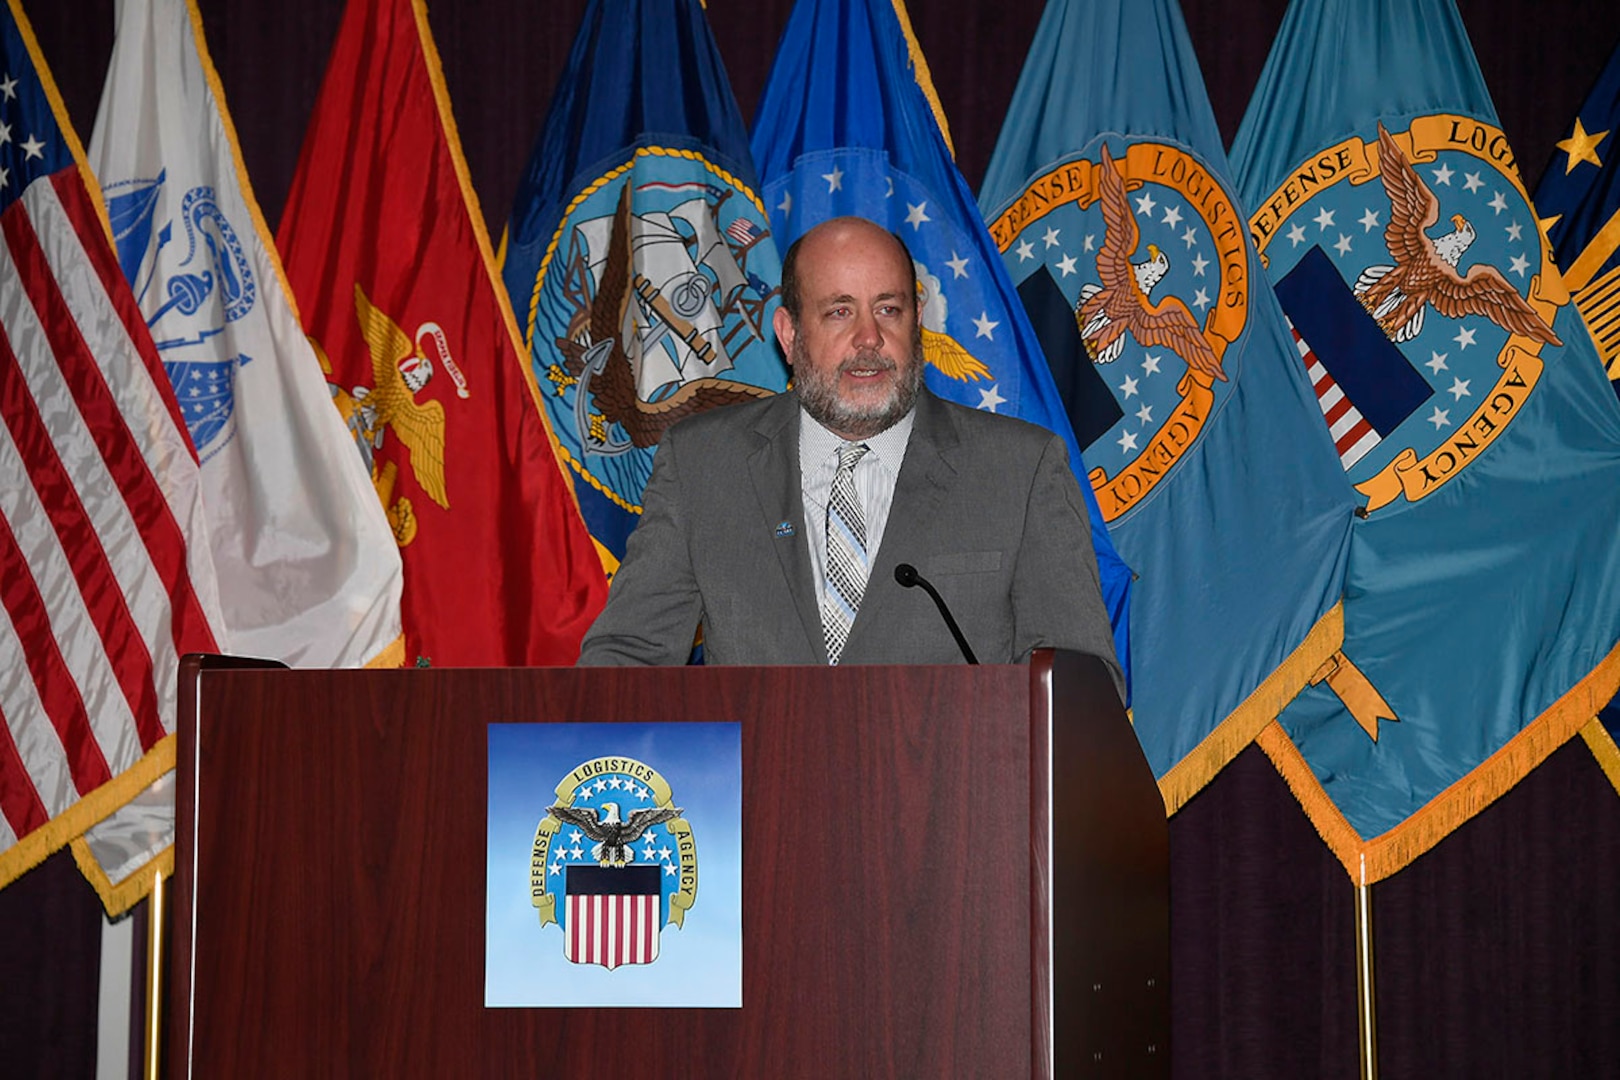 James Doelling, director of the Battle Creek, Michigan Veterans Affairs Medical Center